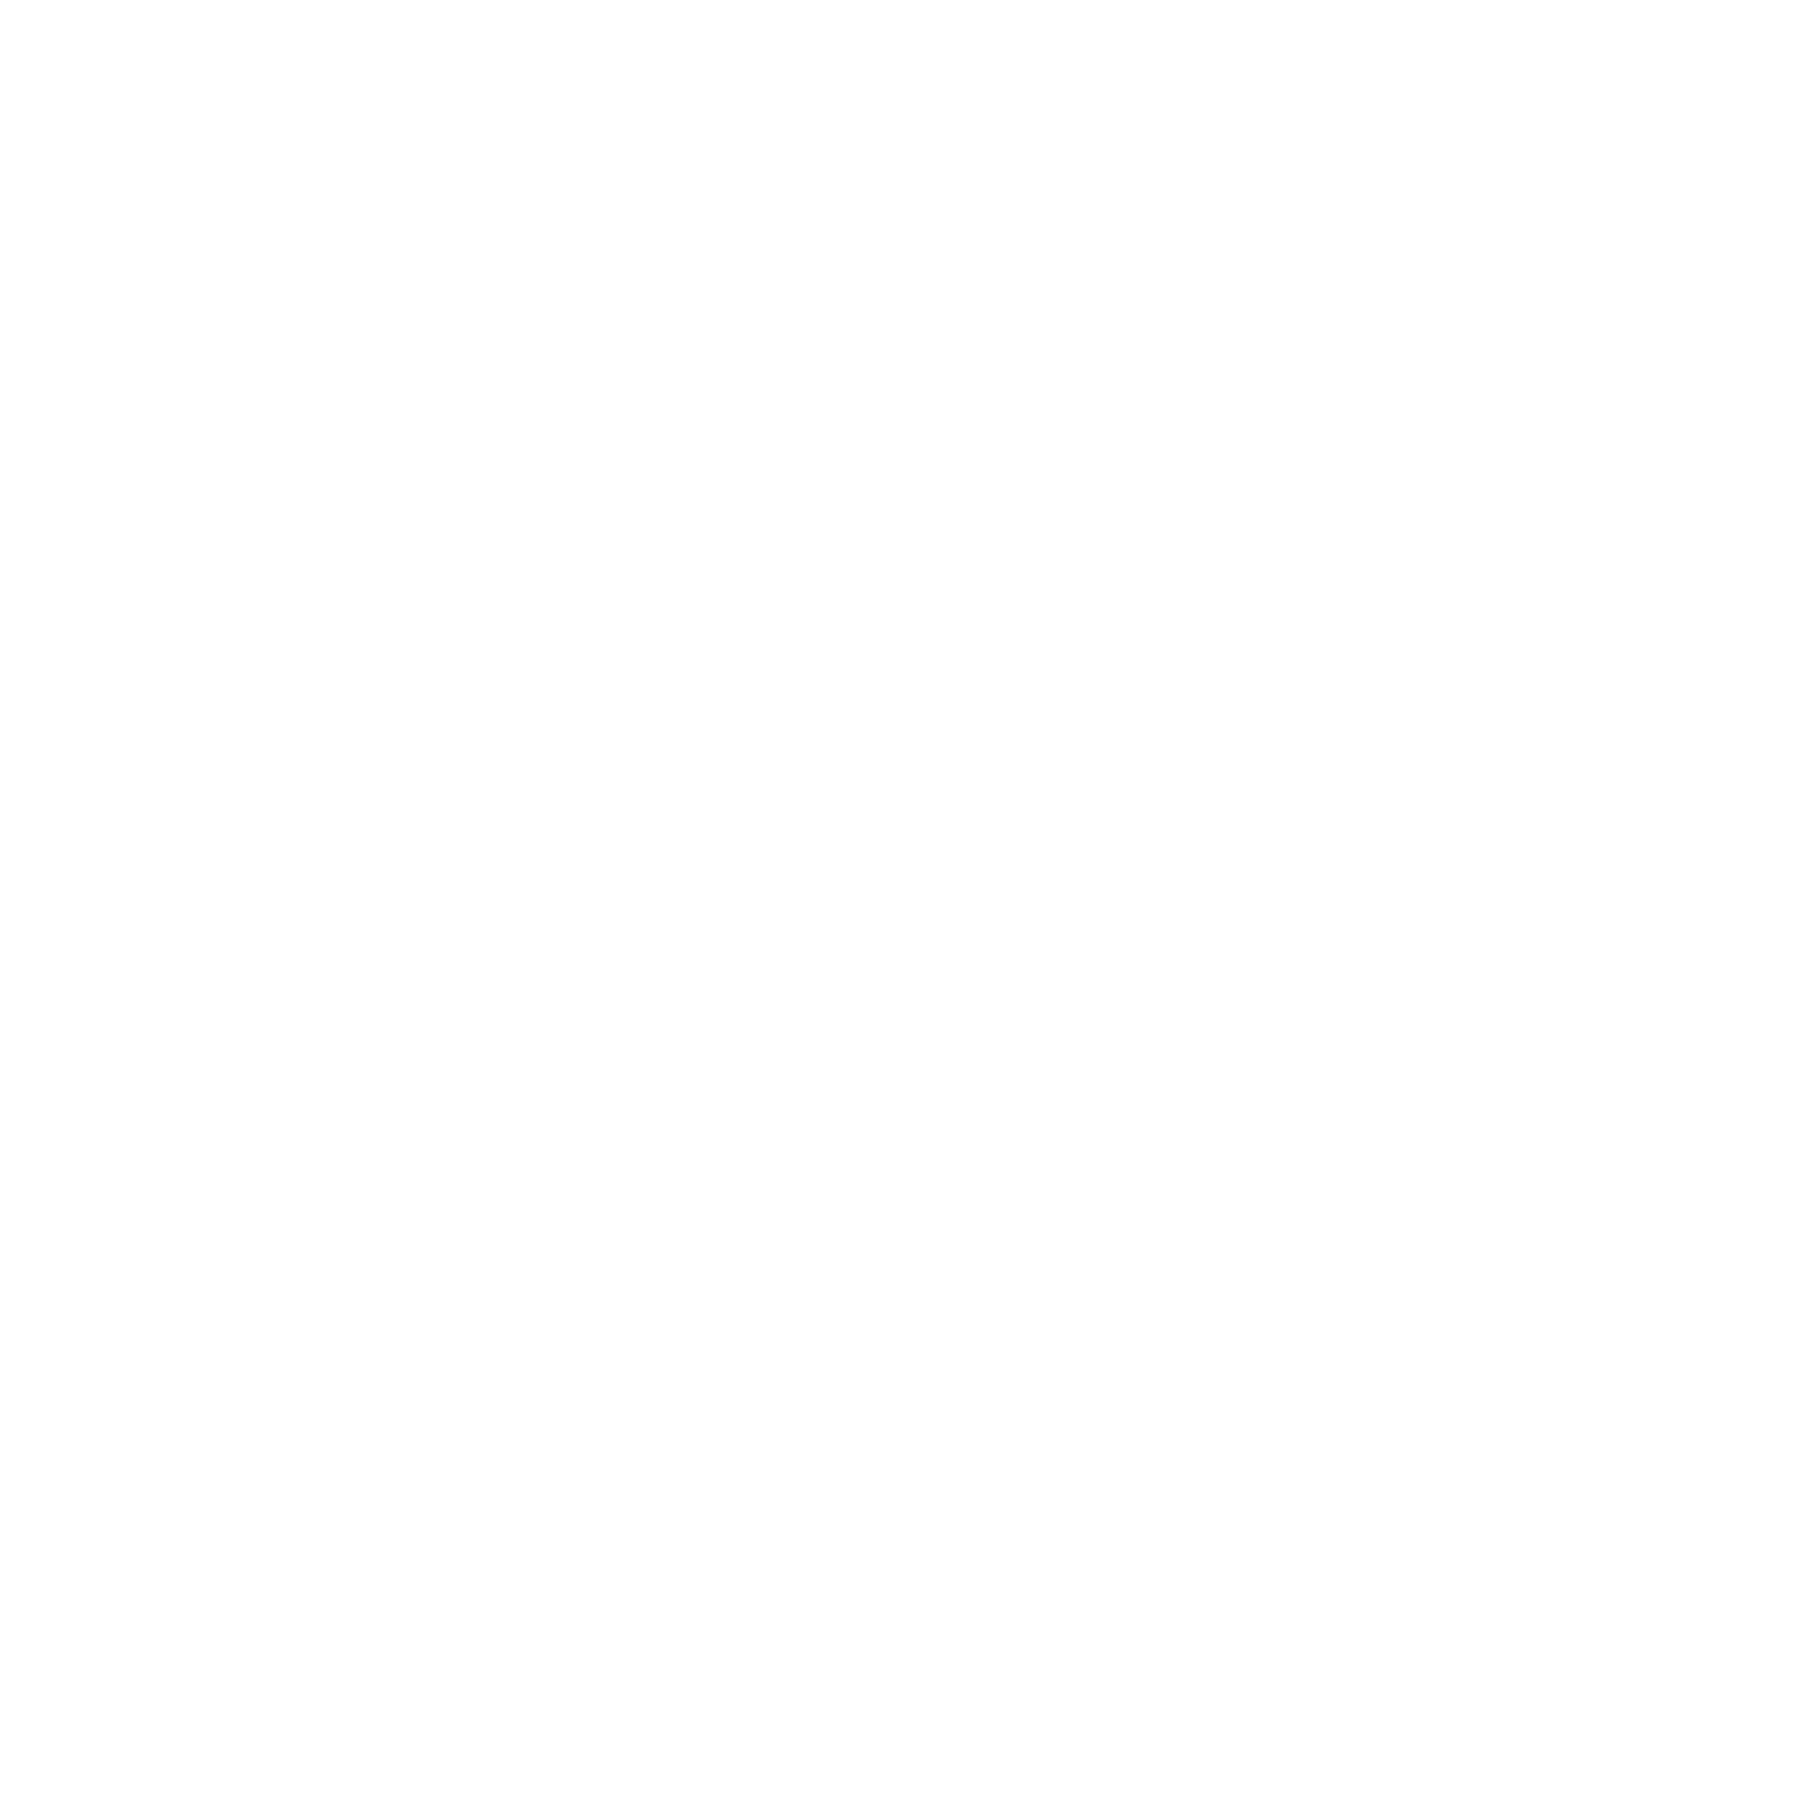 Deeksha Language Academy and Consultancy